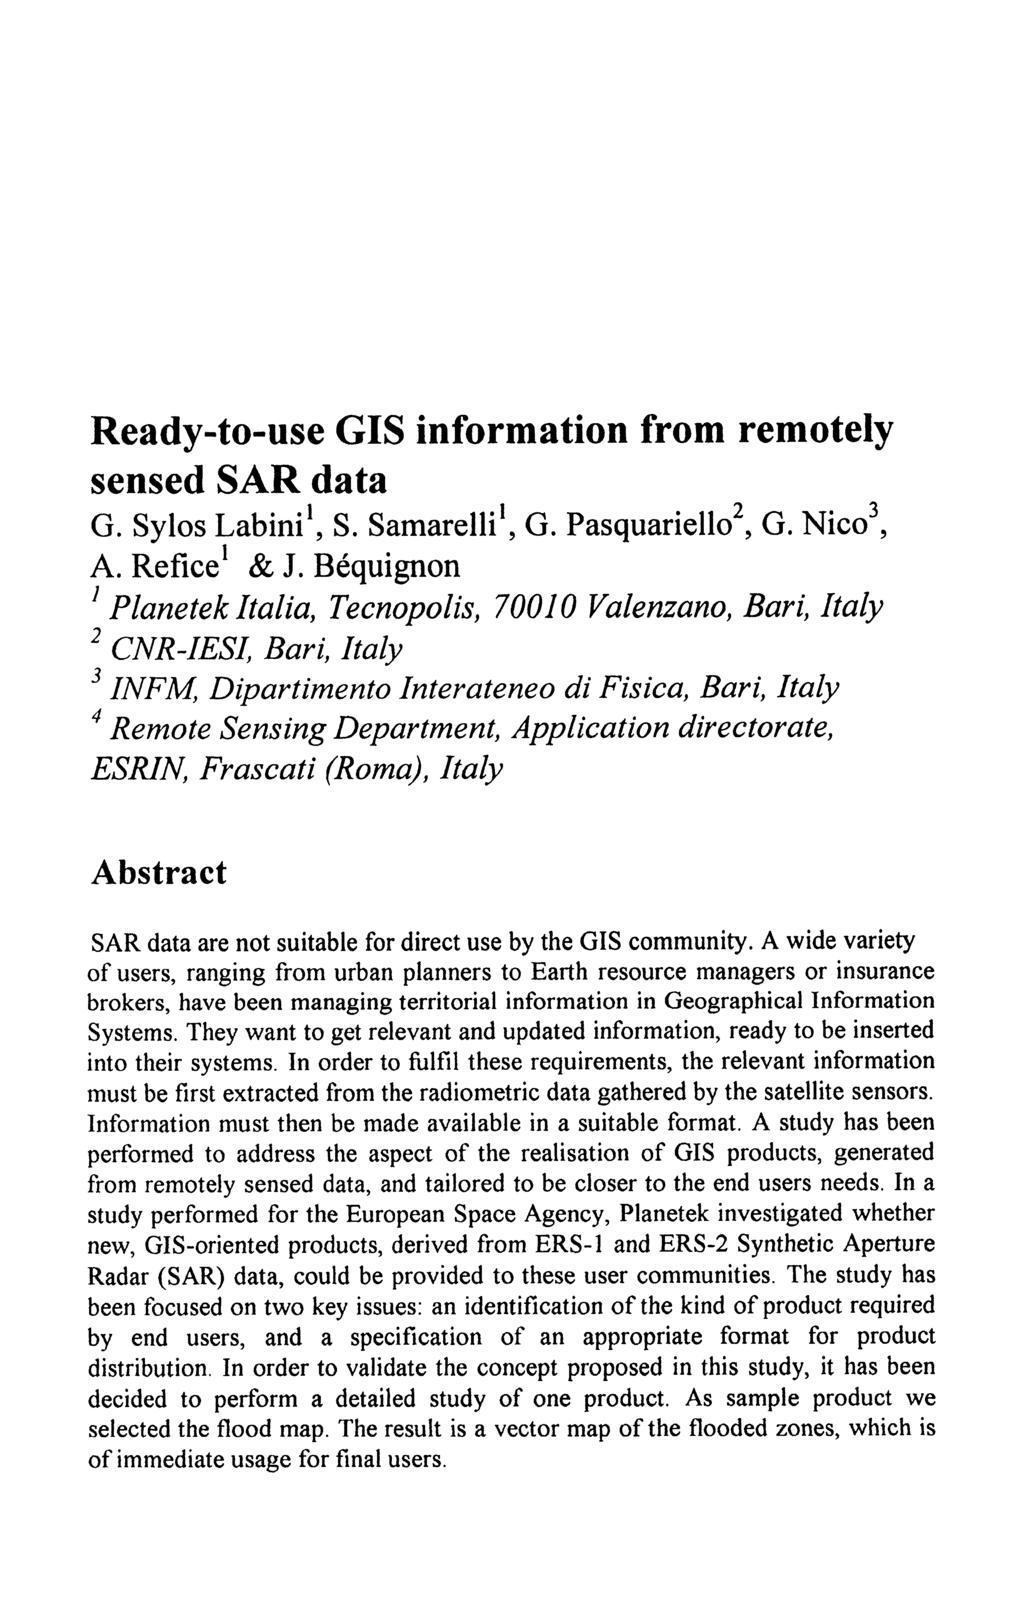 Ready-to-use GIS information from remotely sensed data G. Sylos Labini*, S. Samarelli*, G. Pasquariello^ G. Nico*, A. Refice* & J.